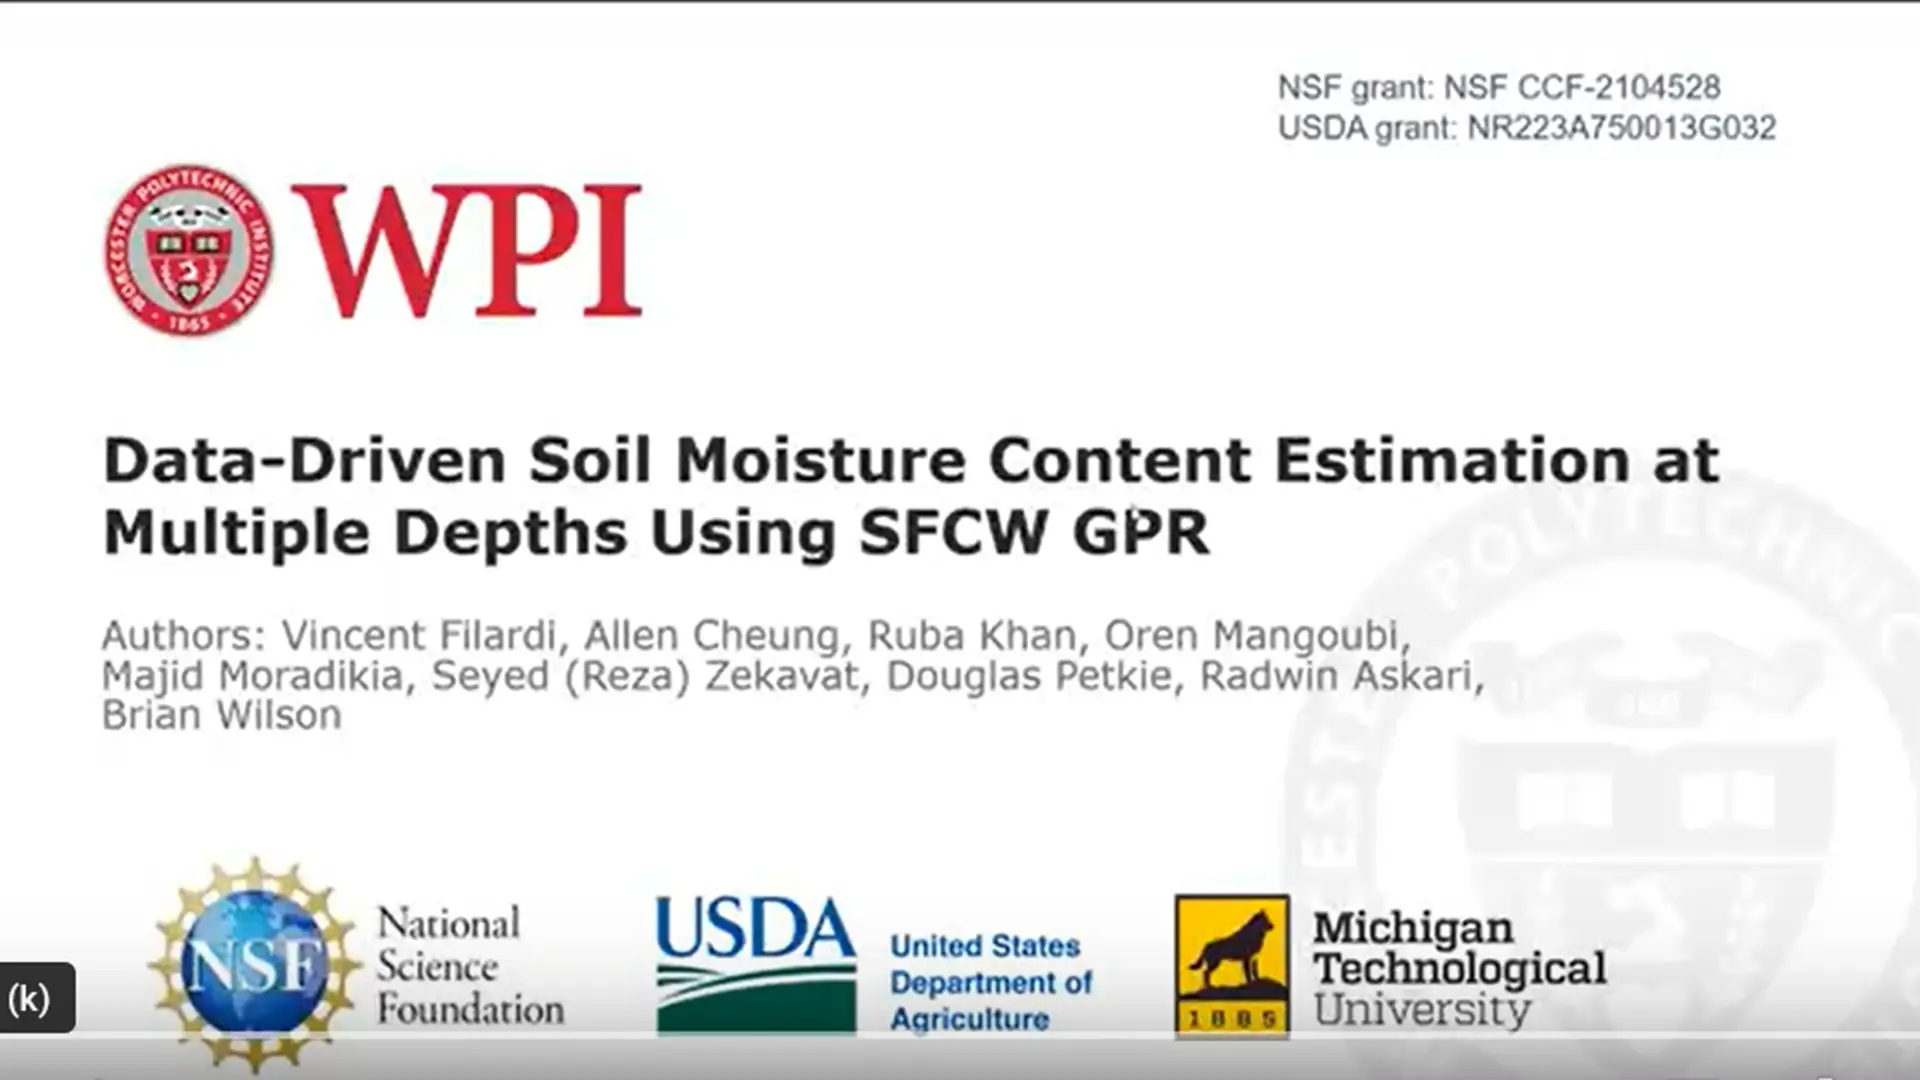 Data-Driven Soil Moisture Content Estimation at Multiple Depths Using SFCW GPR